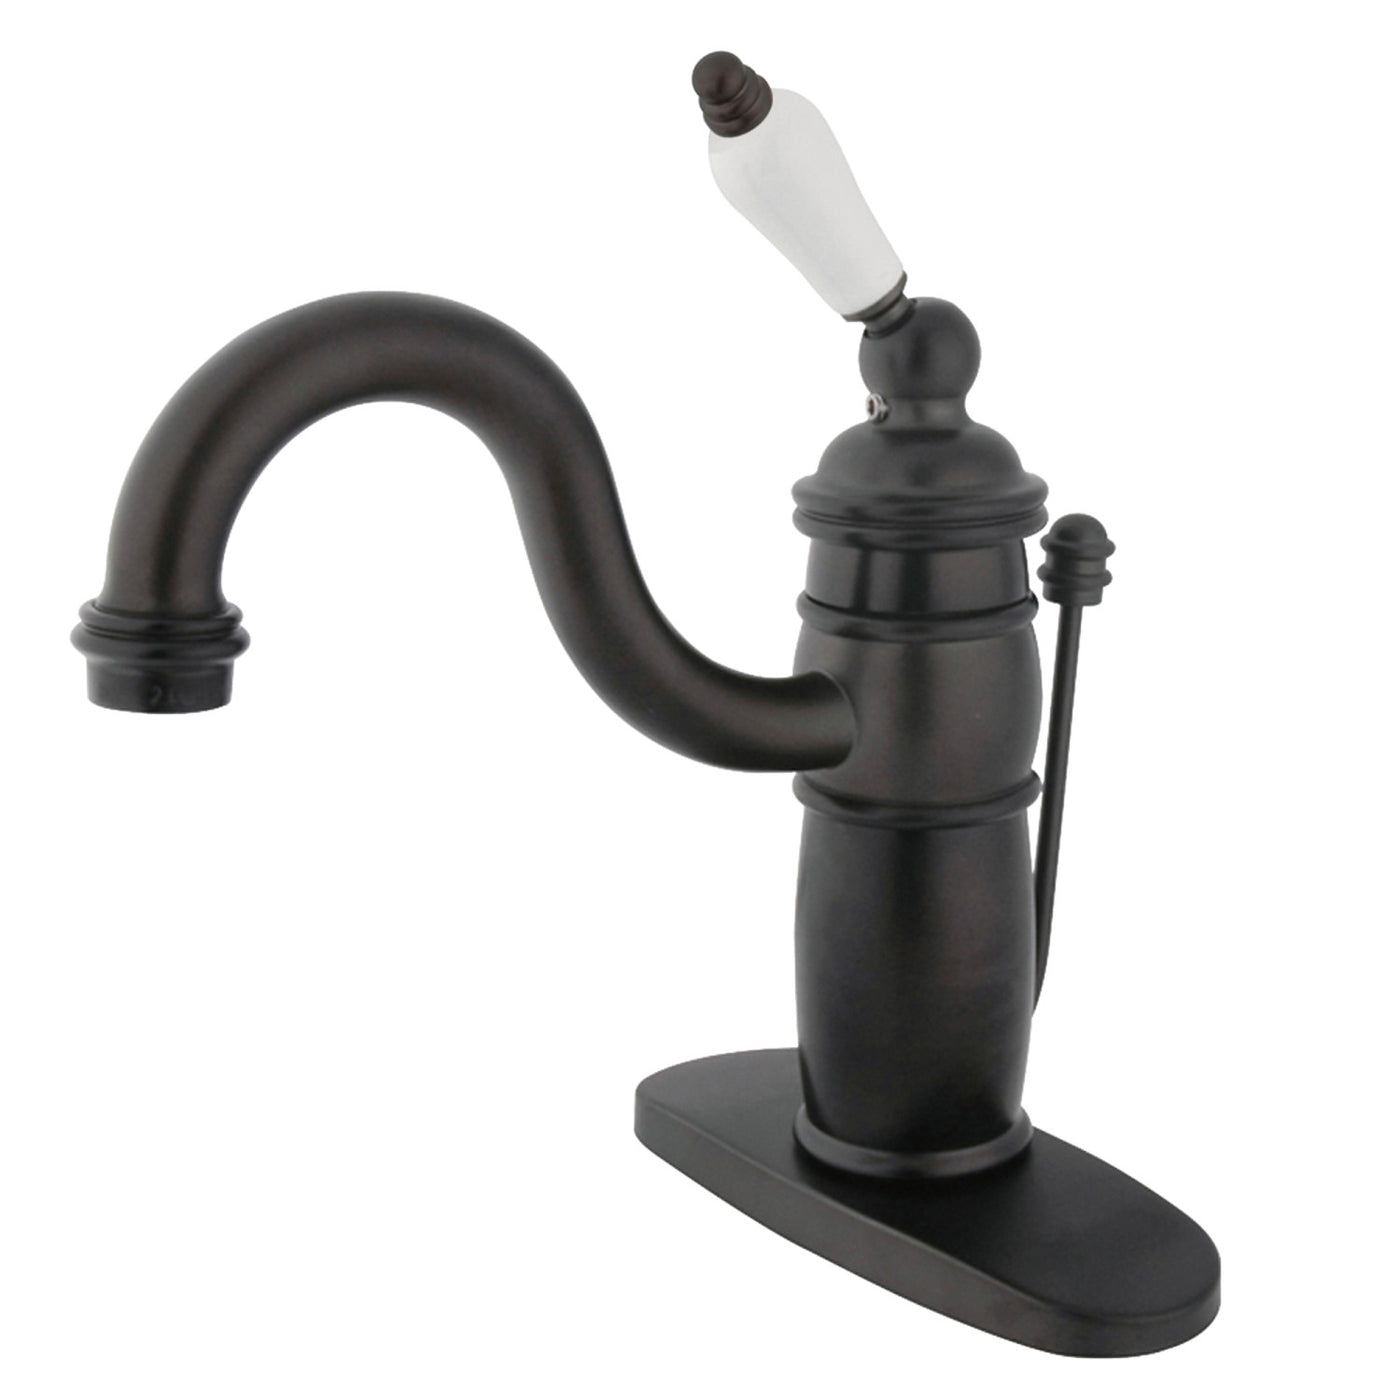 Elements of Design EB1405PL Single-Handle Bathroom Faucet with Pop-Up Drain, Oil Rubbed Bronze